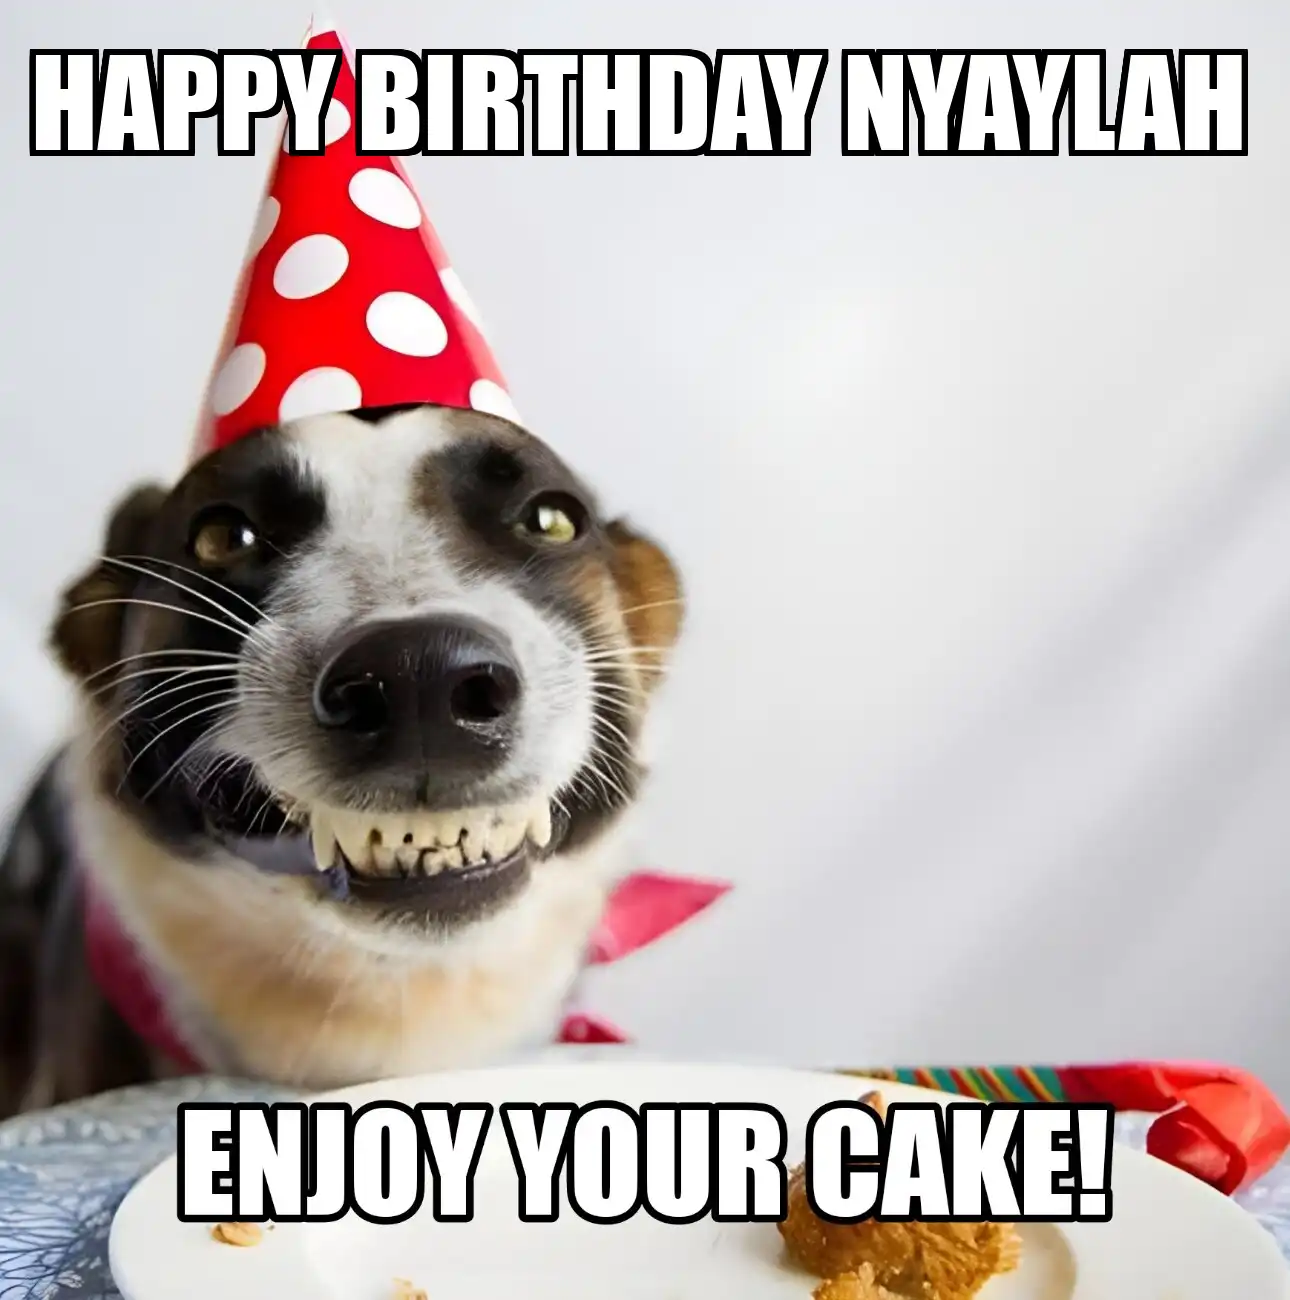 Happy Birthday Nyaylah Enjoy Your Cake Dog Meme